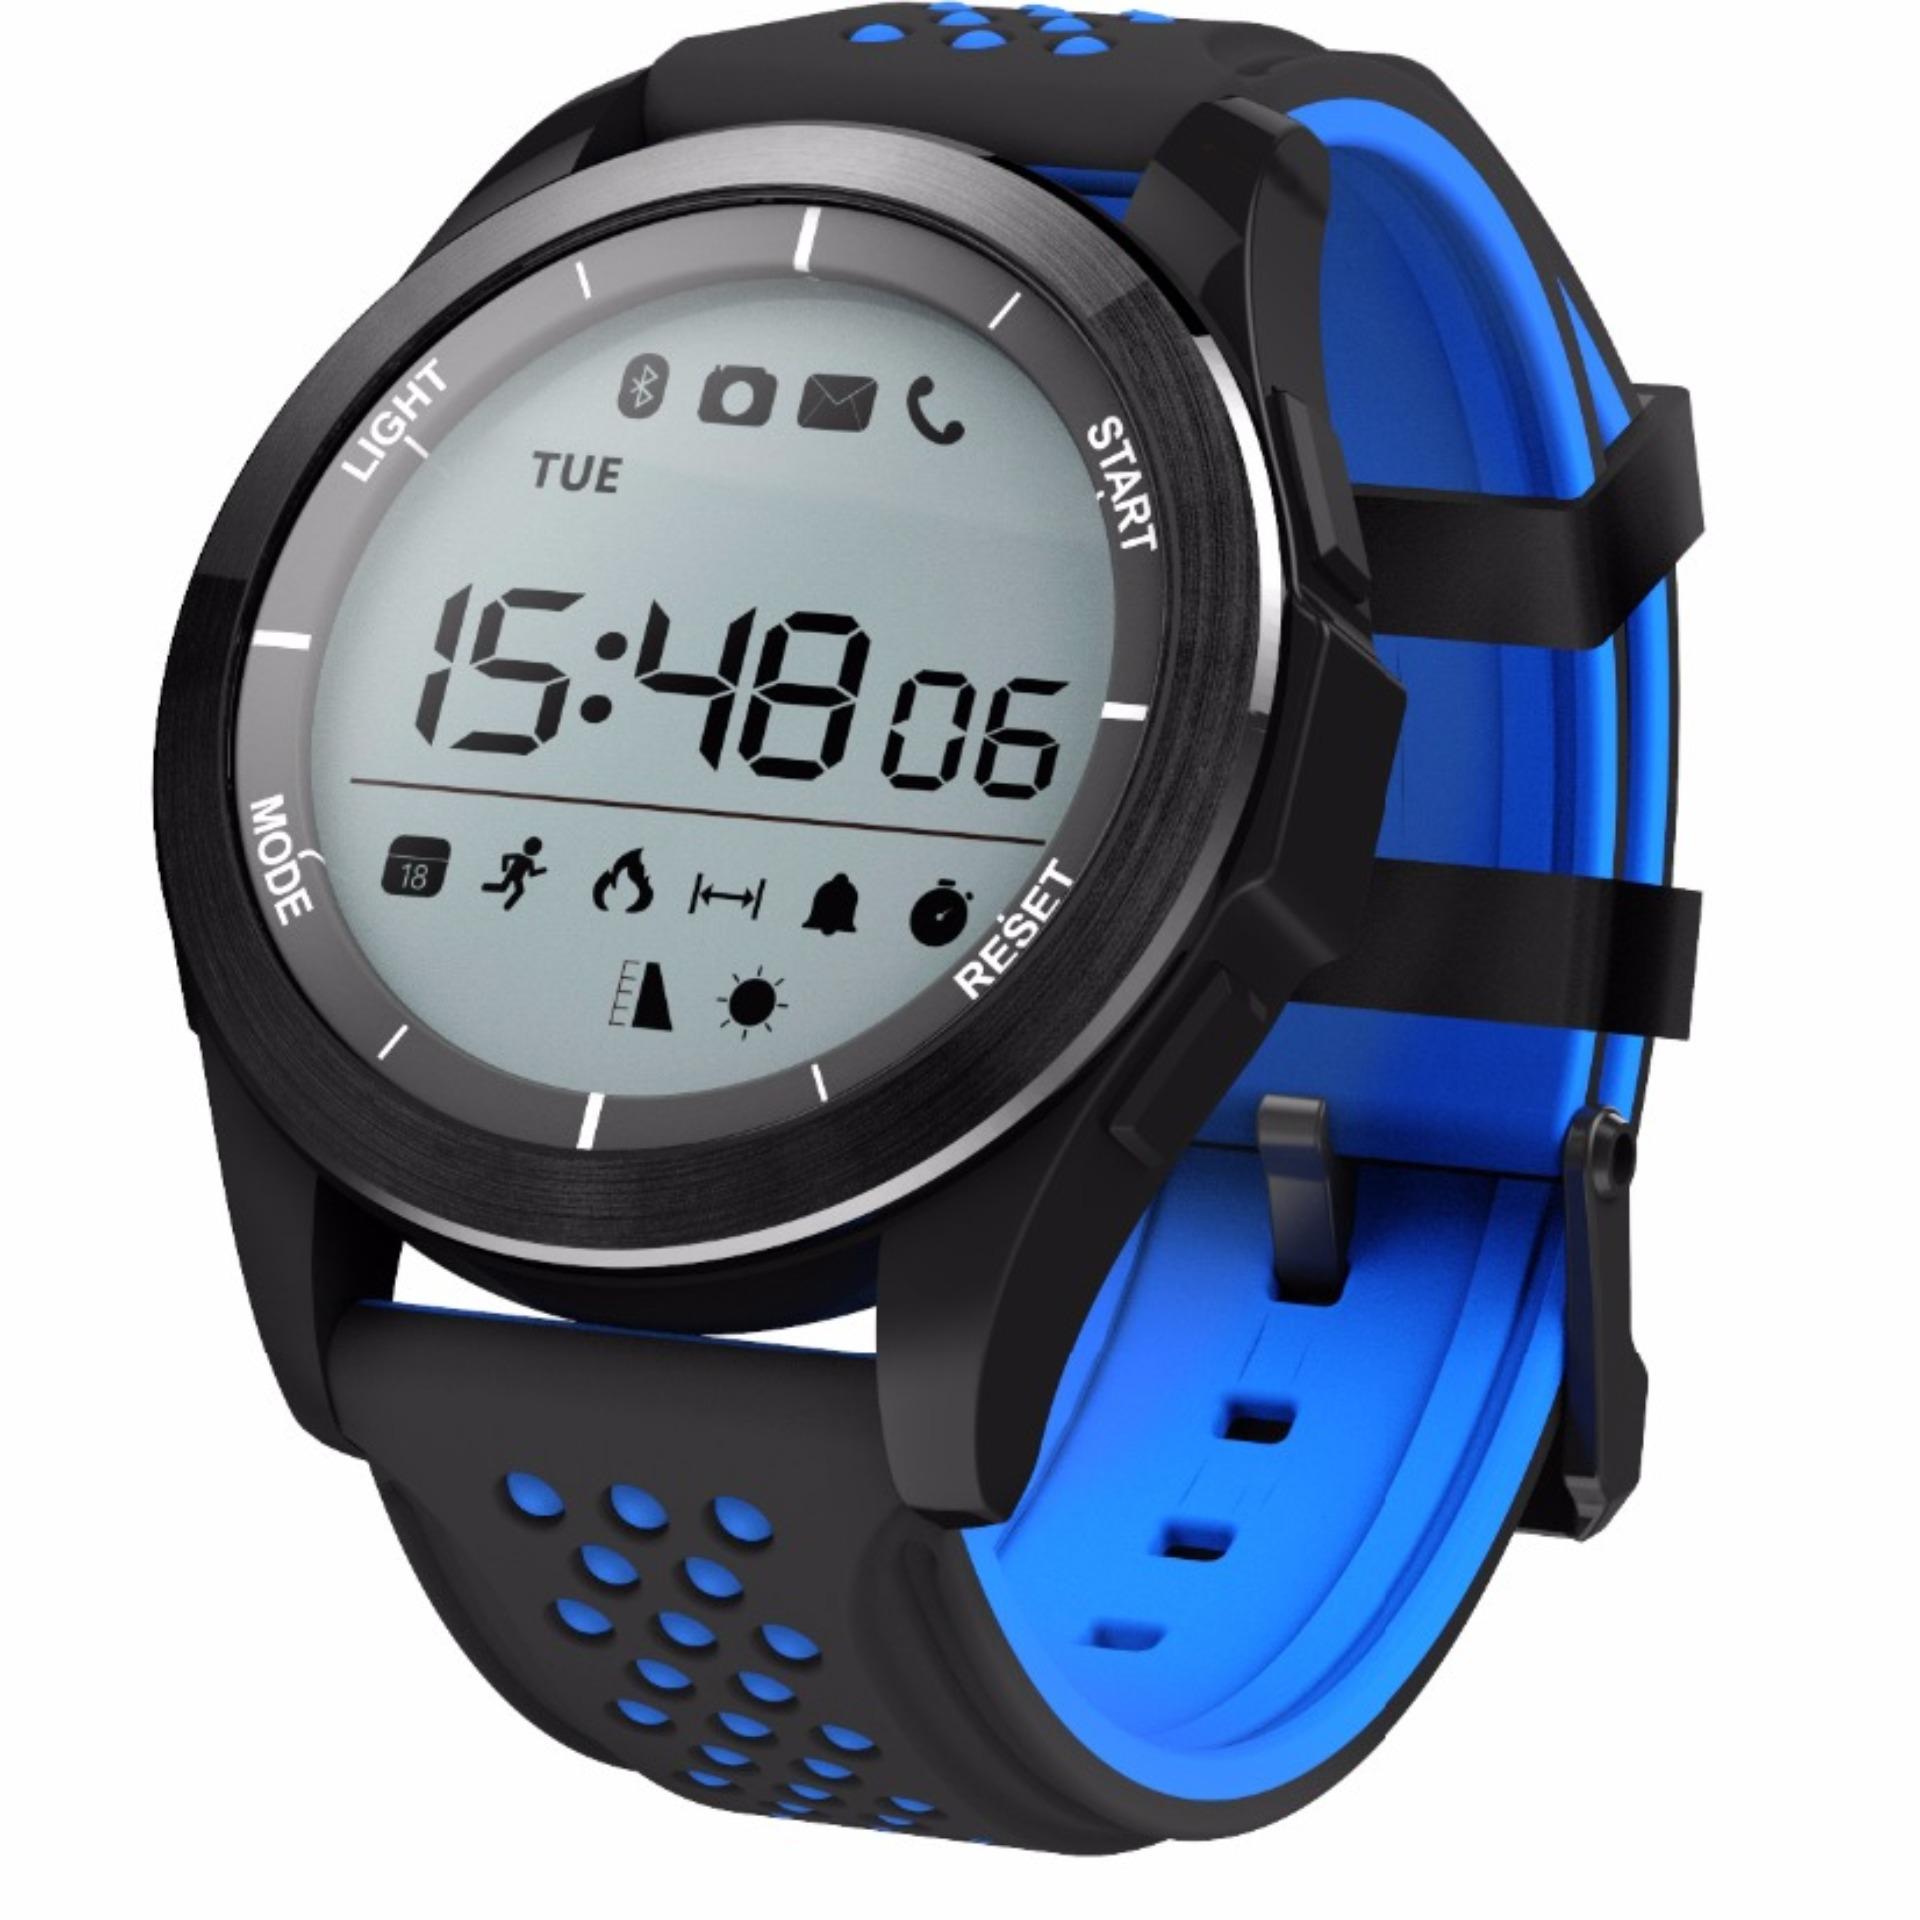 Cognos DT NO.I F3 Smartwatch IP68 waterproof Sport - Biru